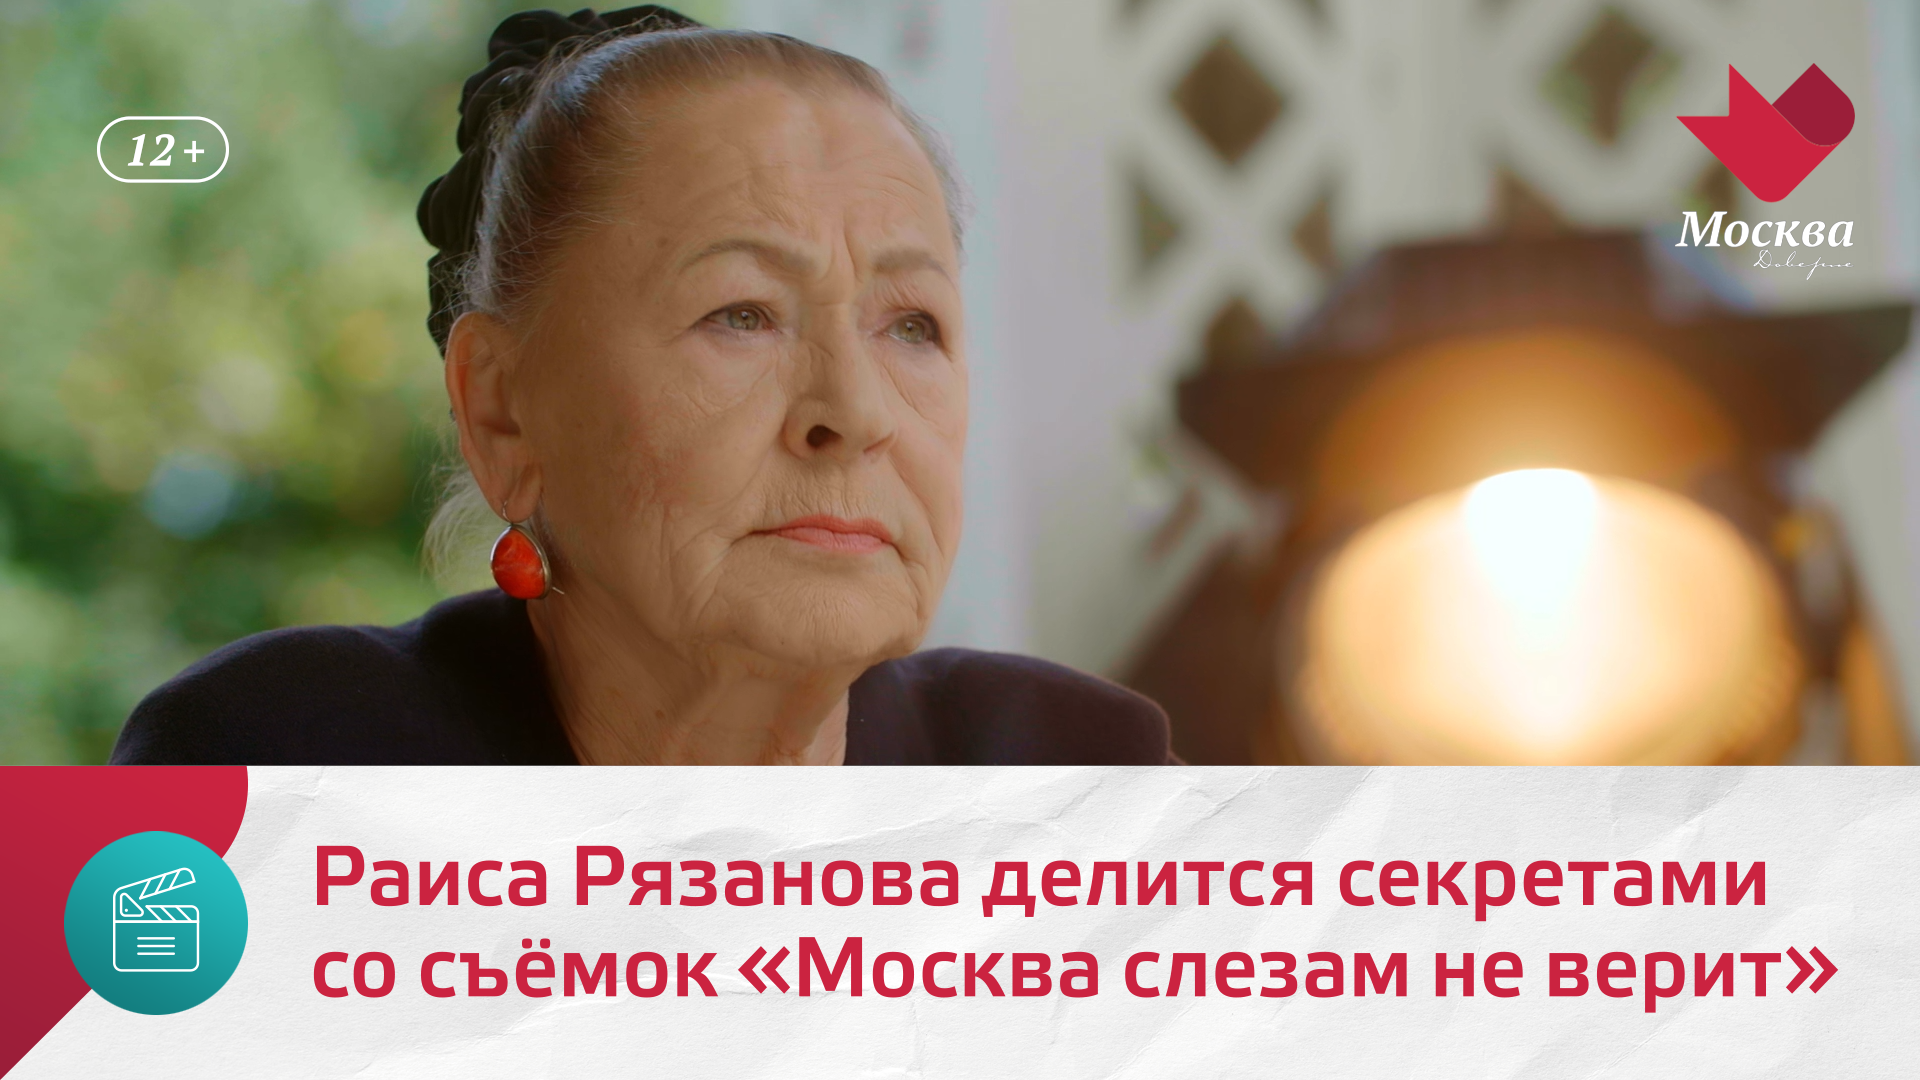 Раиса Рязанова делится секретами со съёмок «Москва слезам не верит» | Киноулица